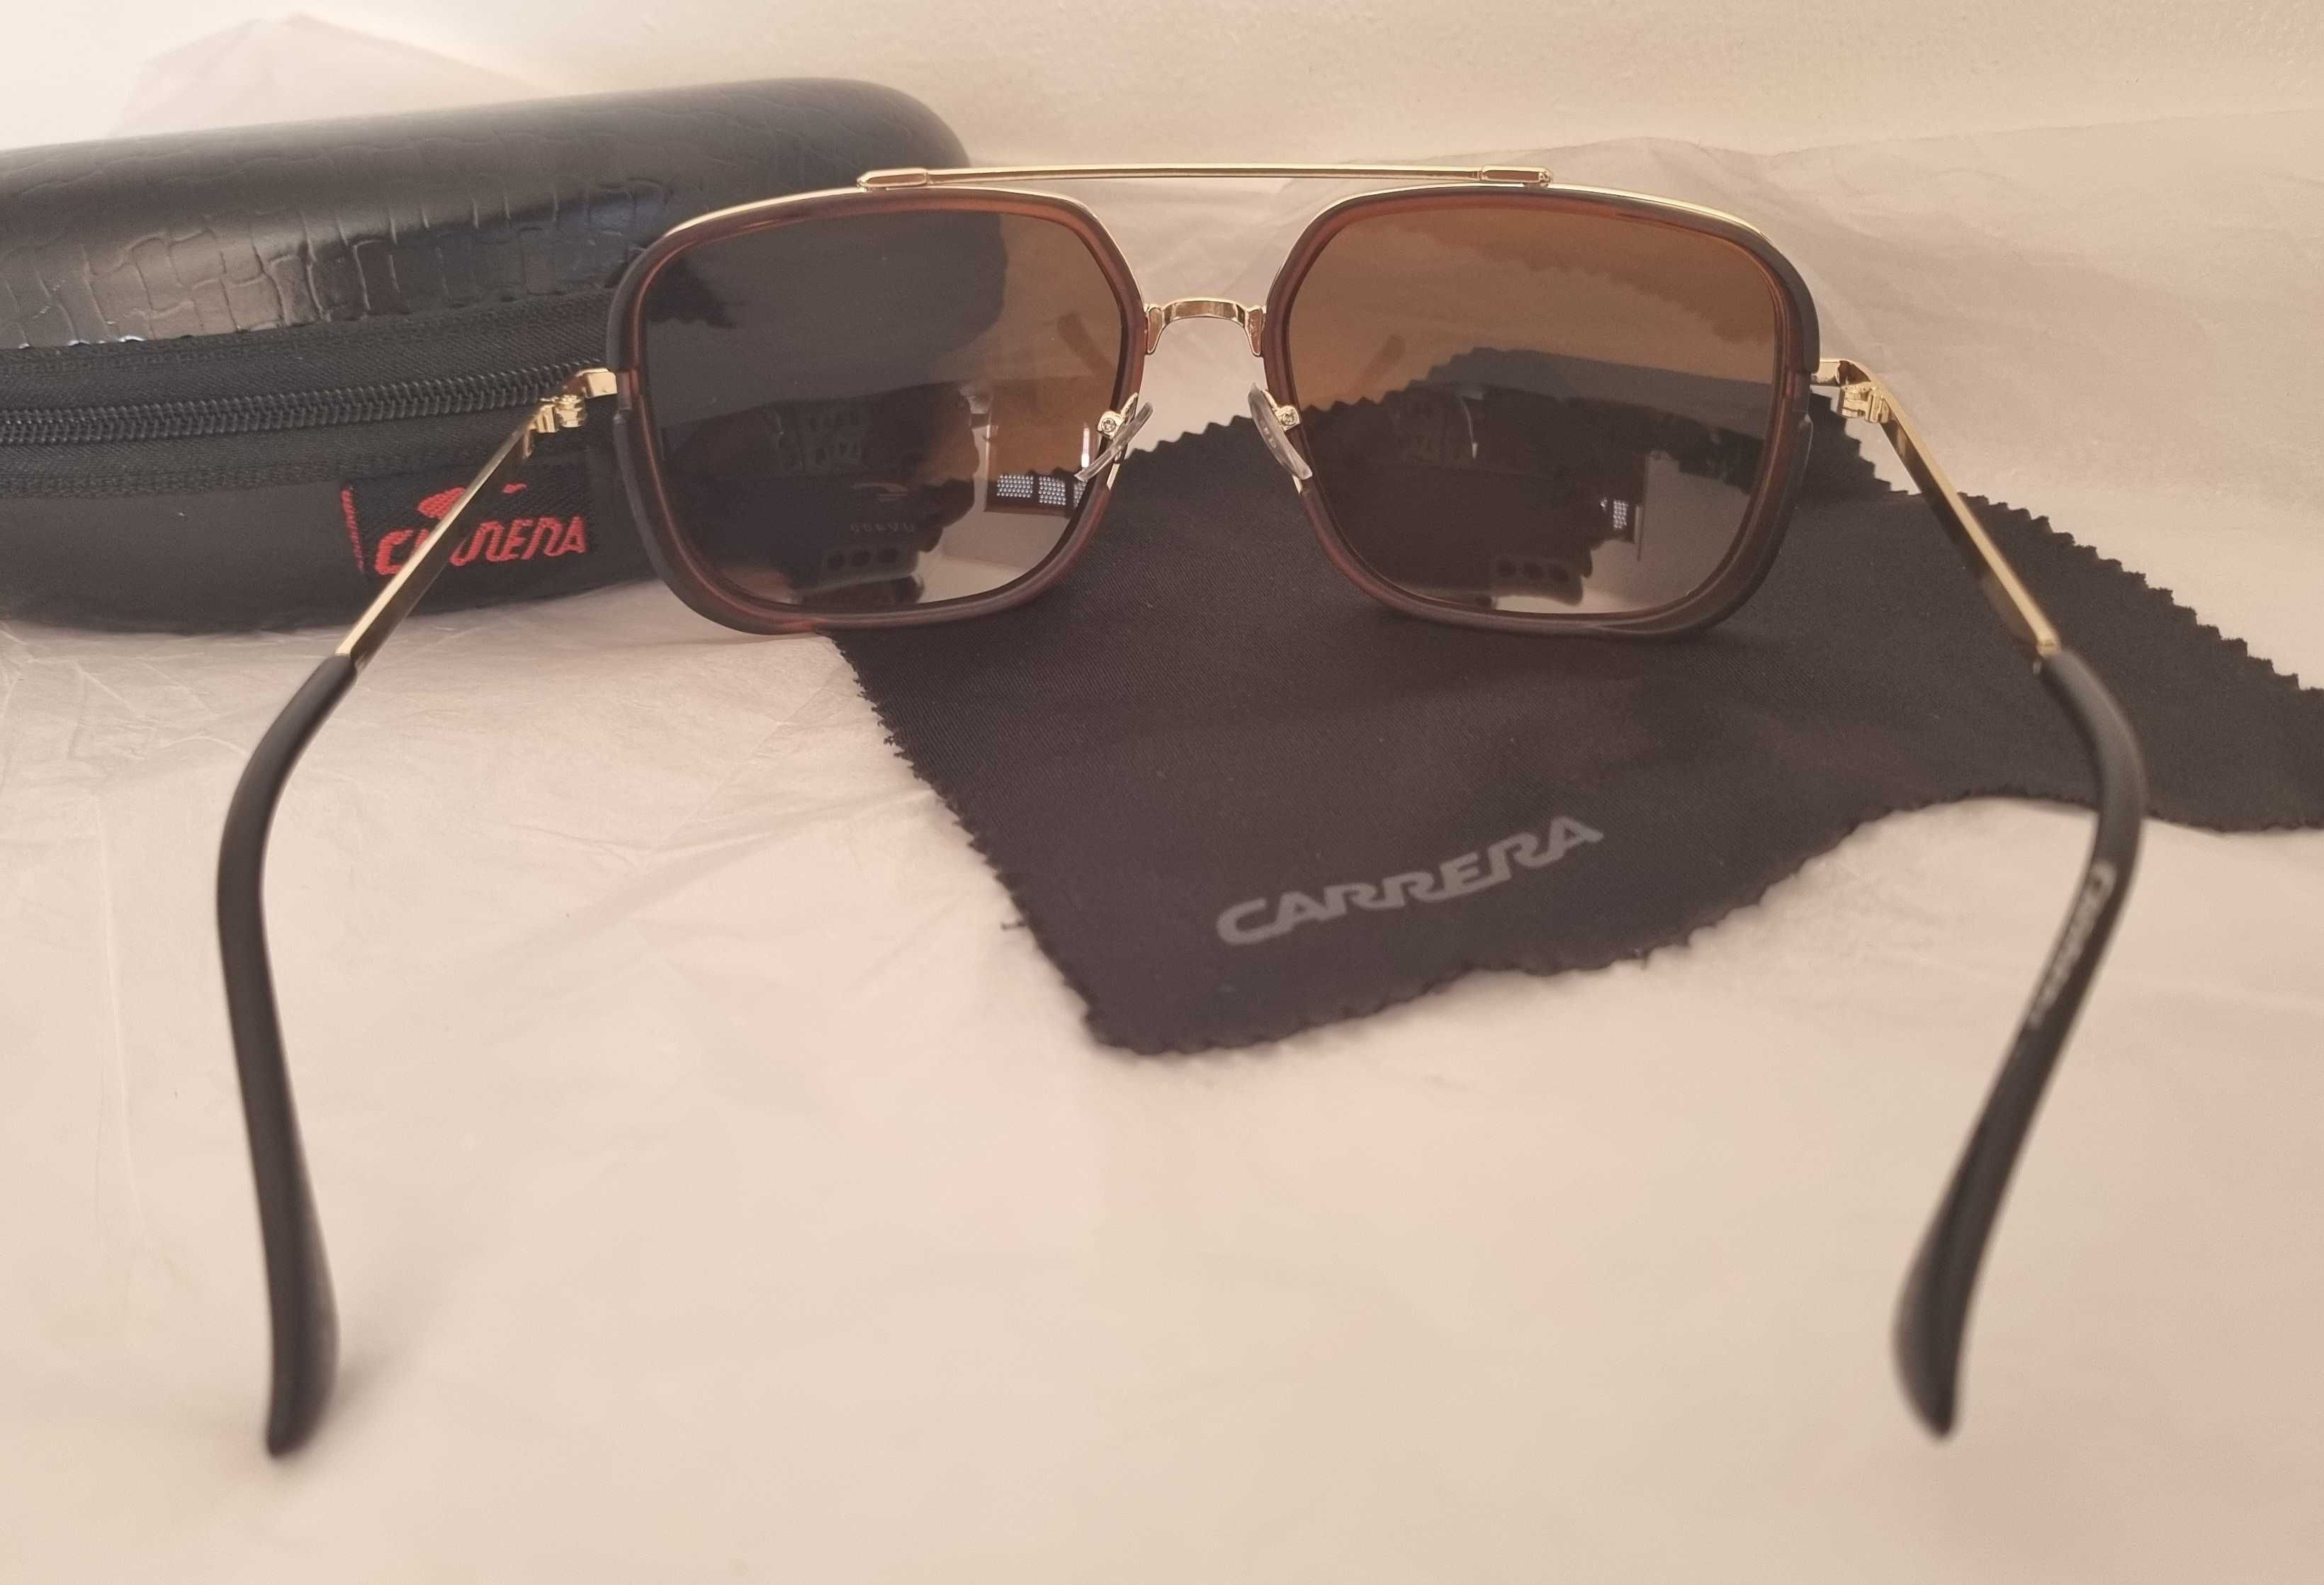 Óculos de sol Carrera 207/S - 4 cores disponiveis